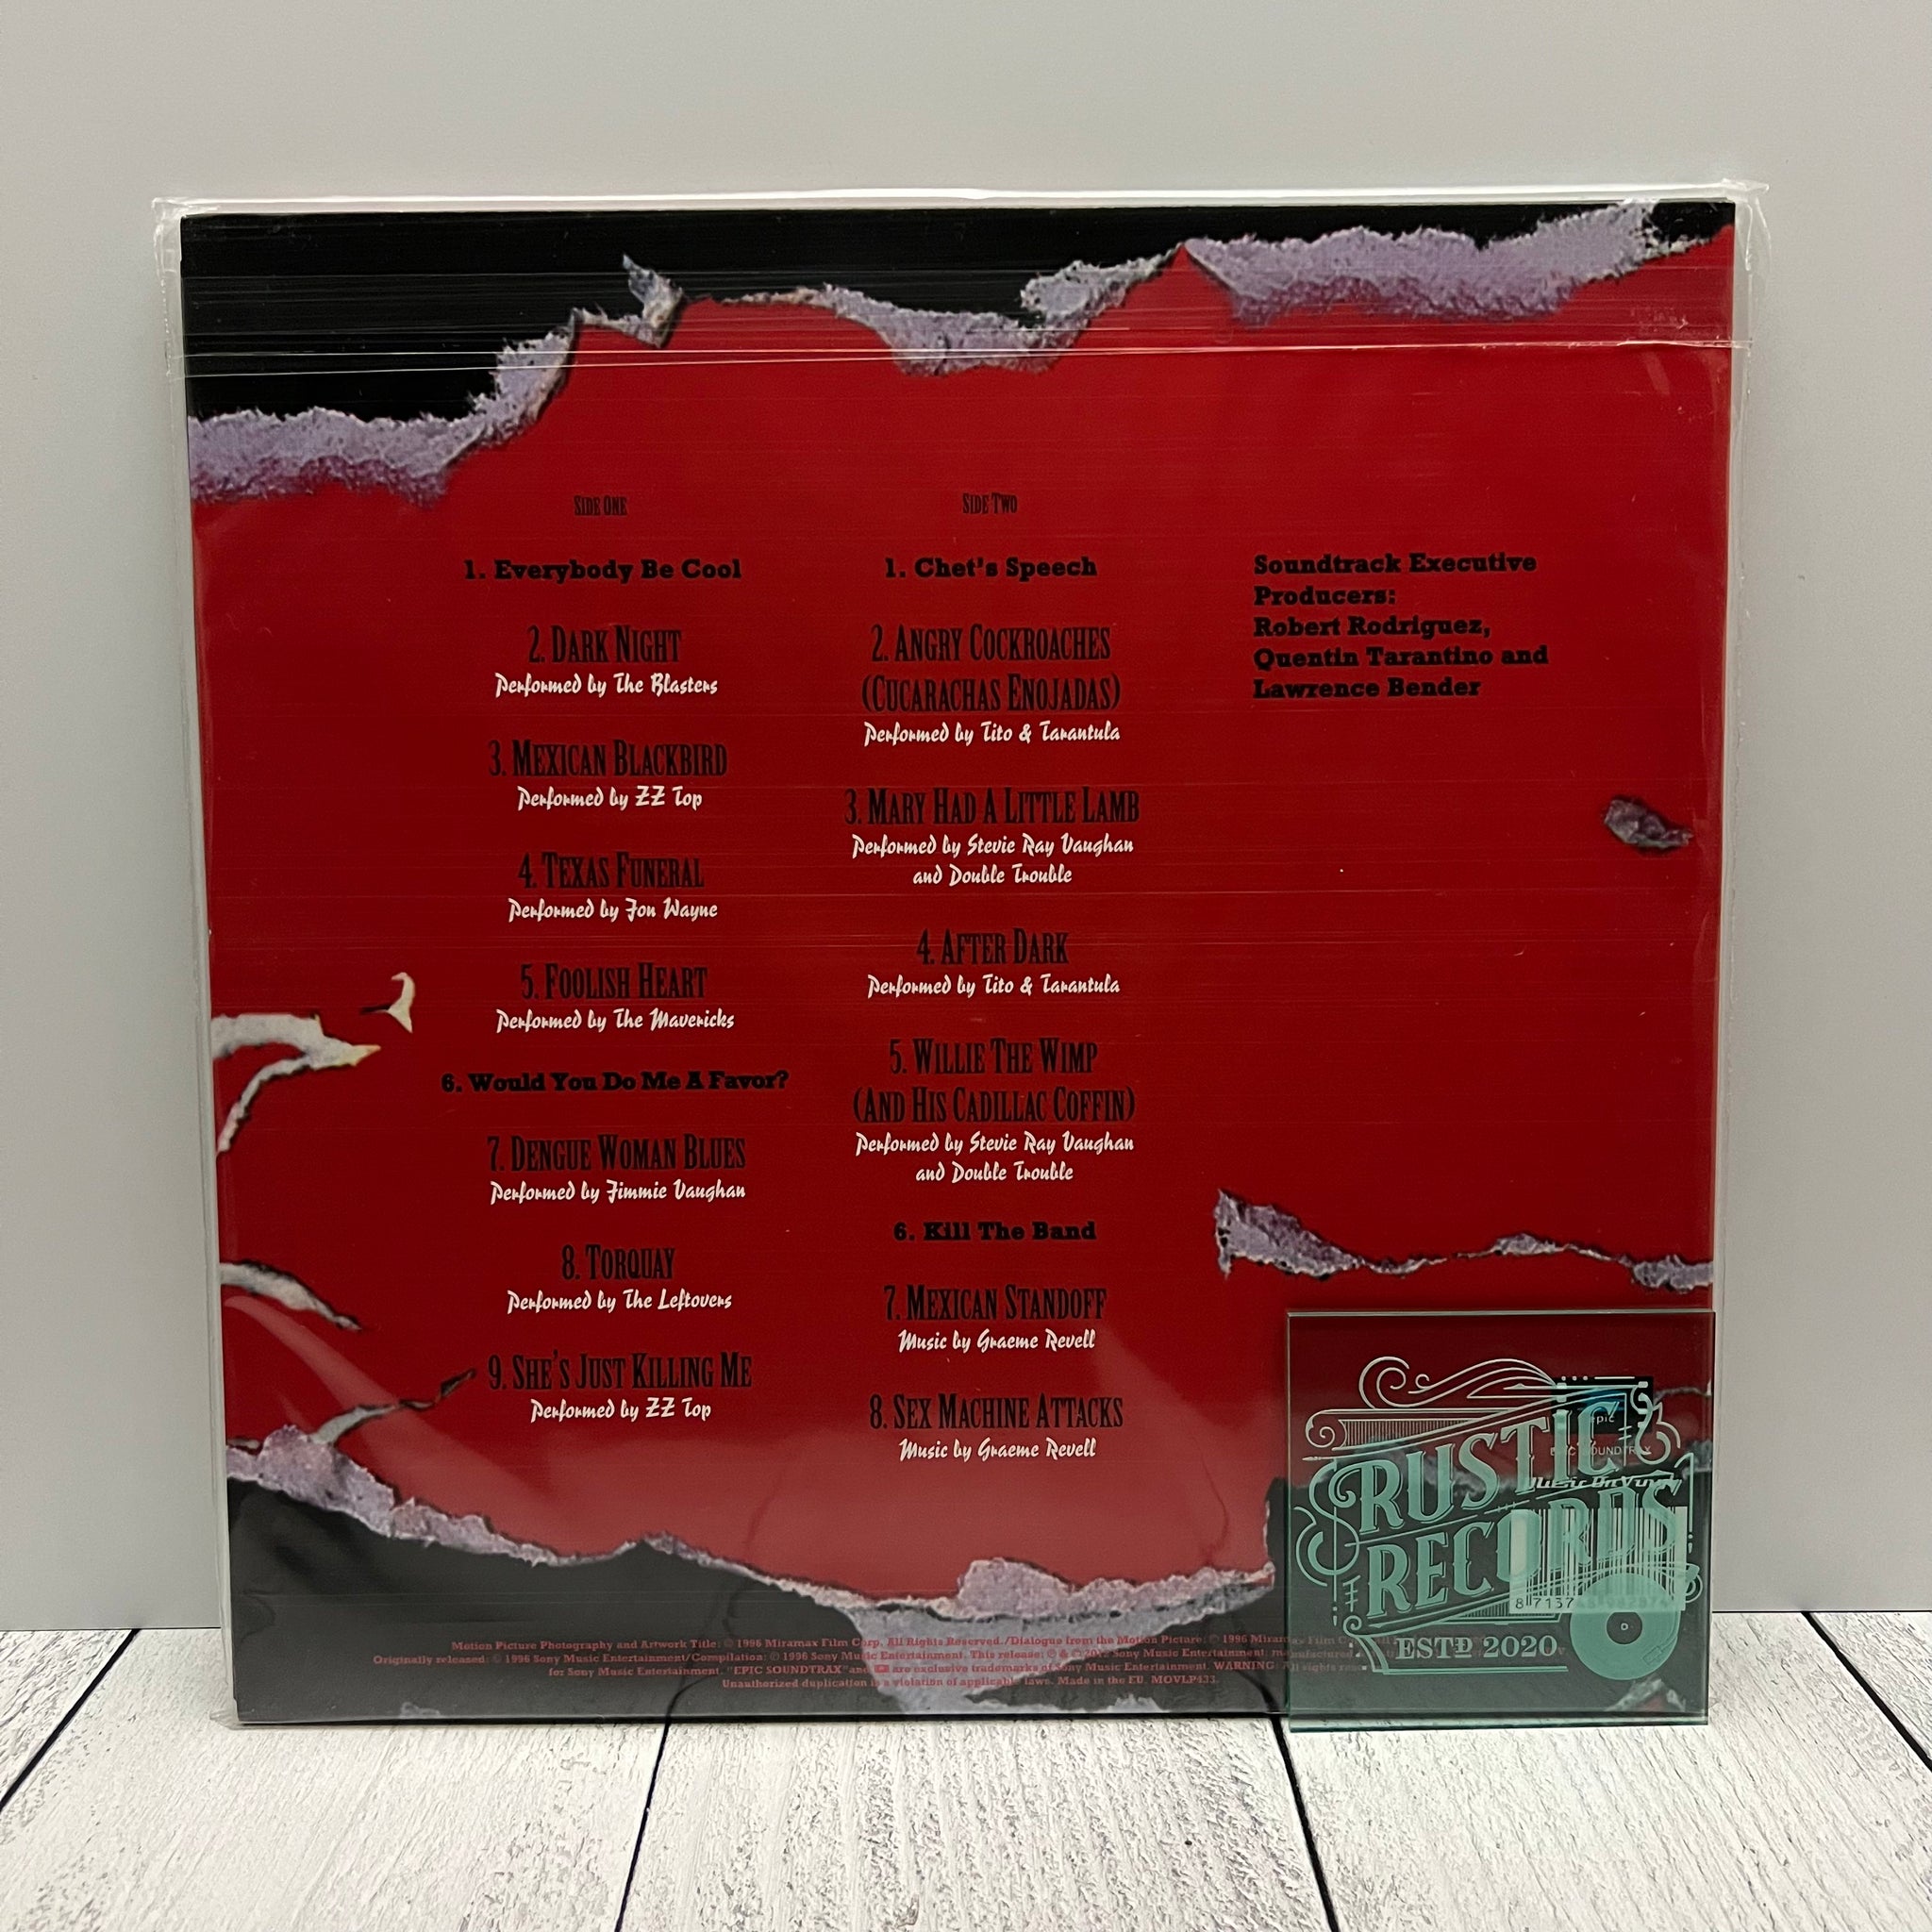 From Dusk Till Dawn Soundtrack (Music On Vinyl)